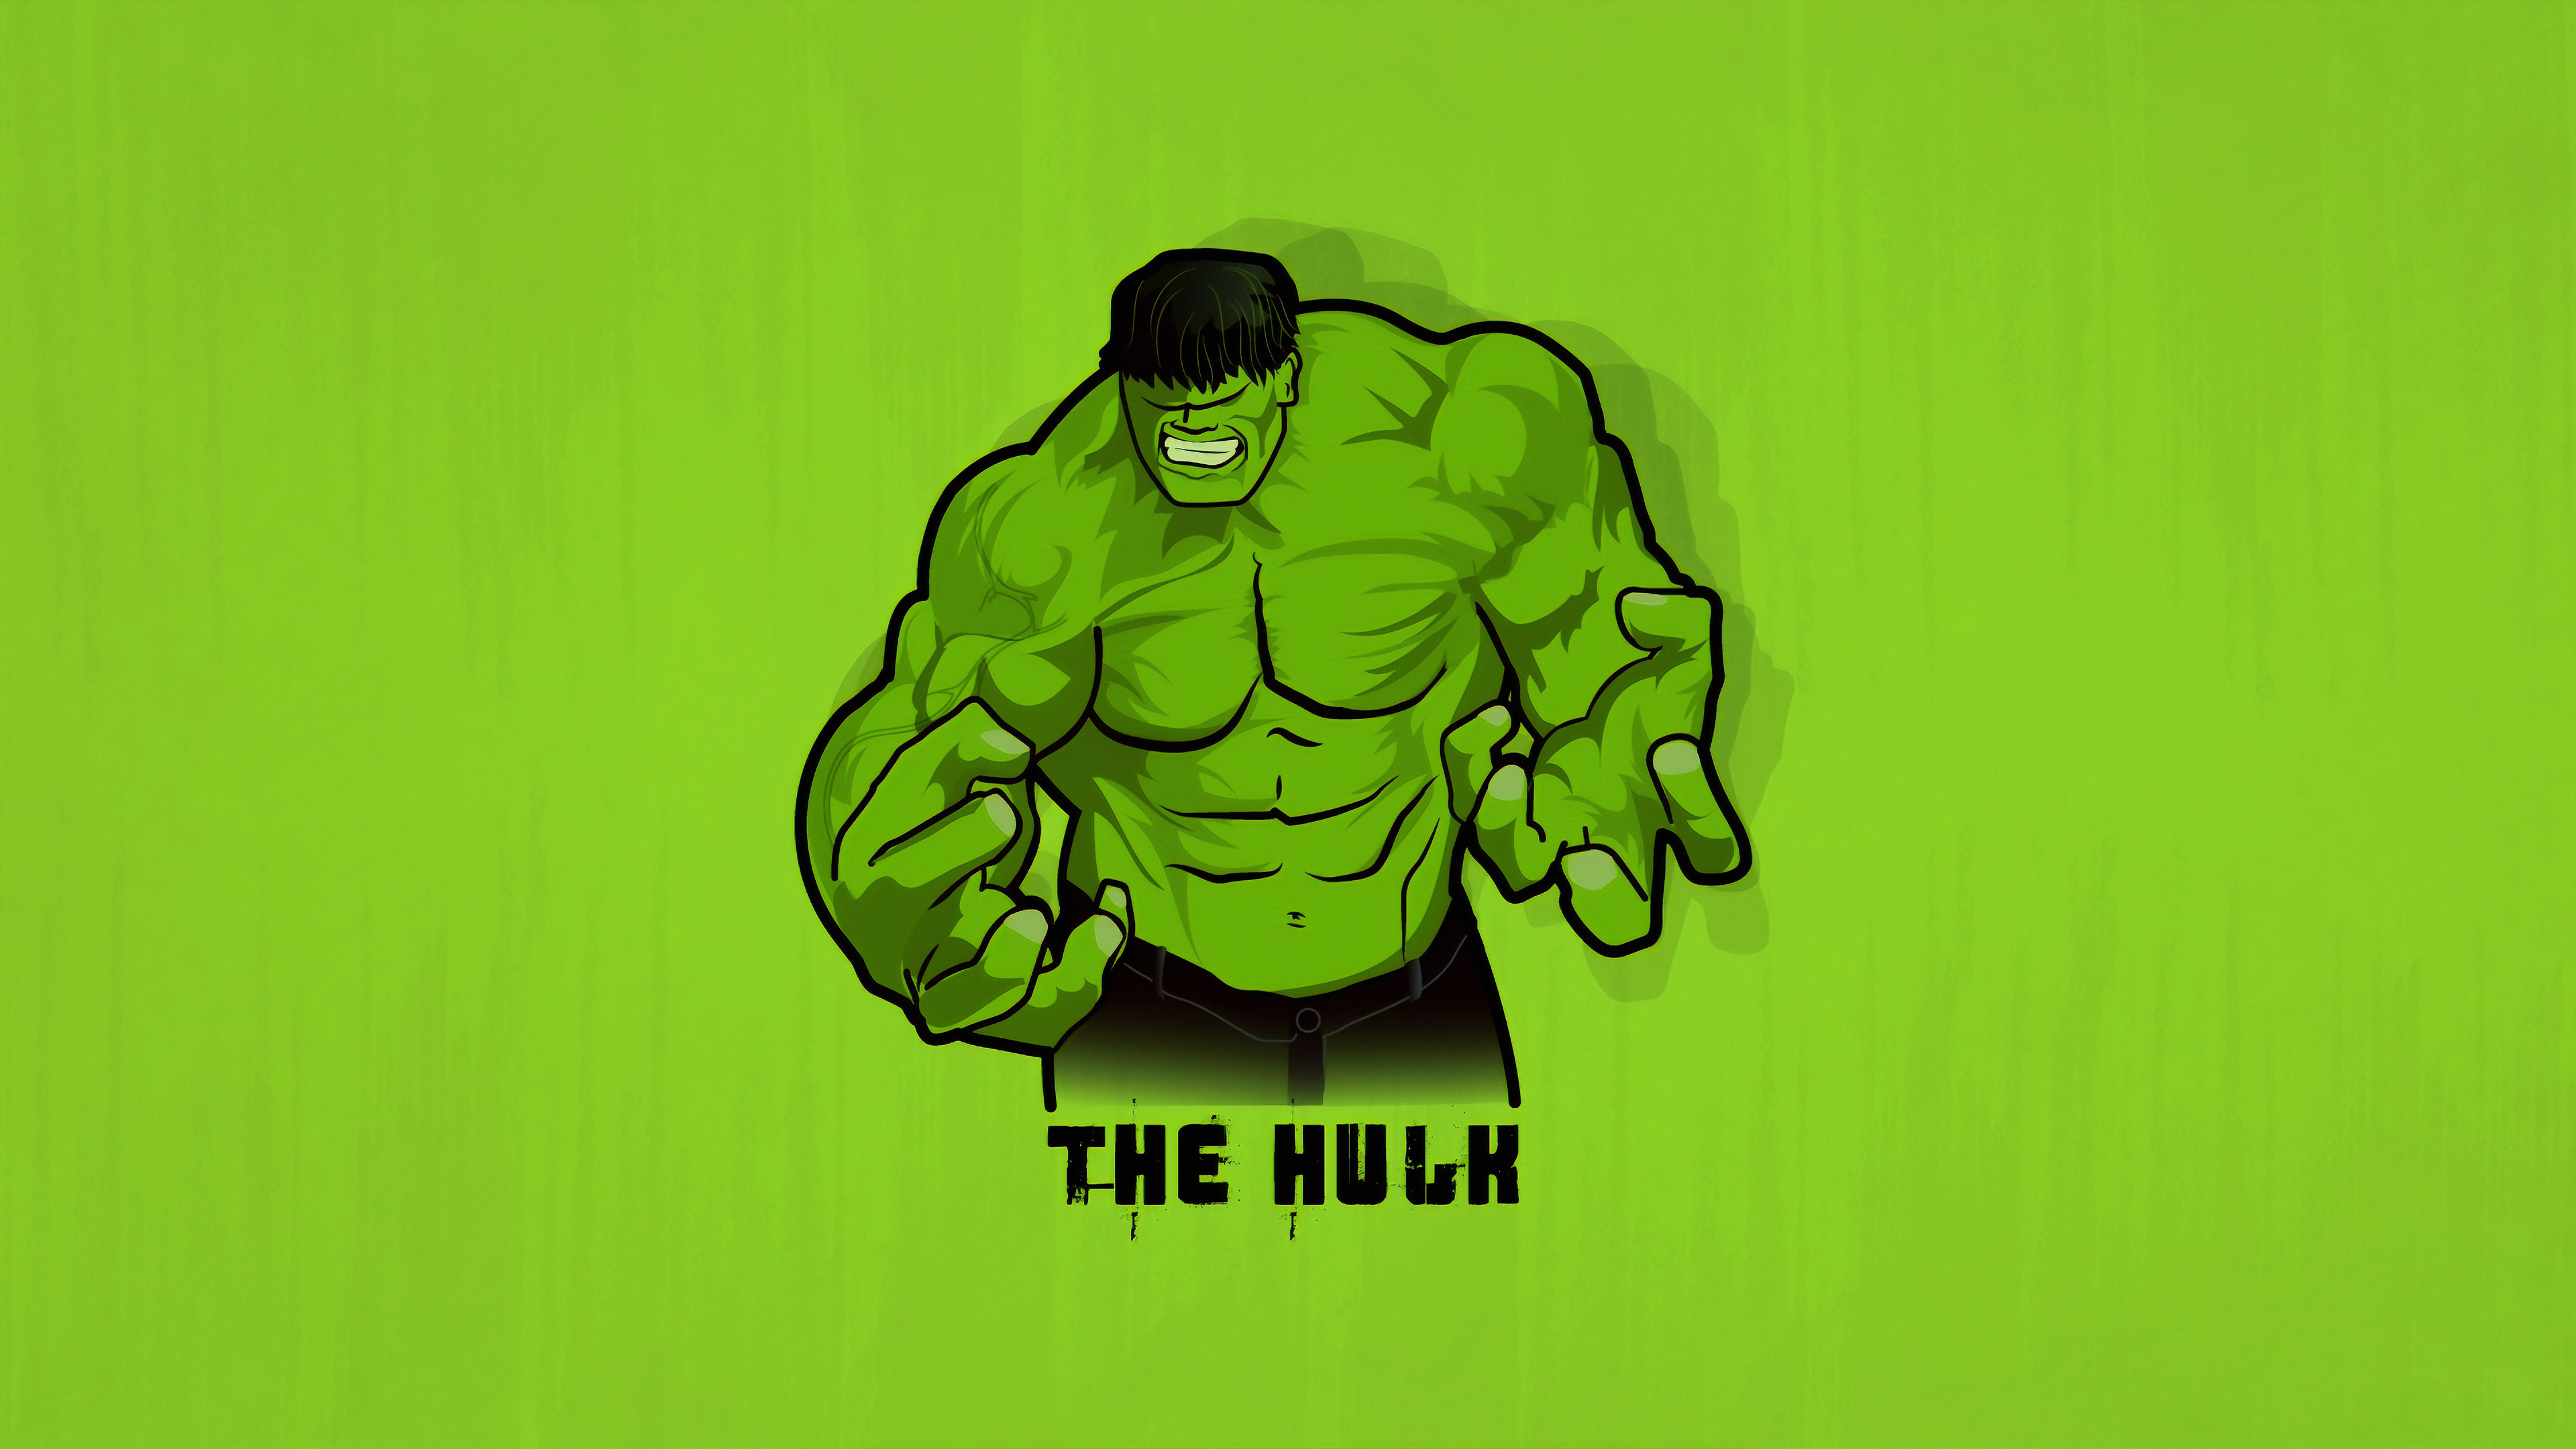 Minimal Hulk Wallpaper, HD Superheroes